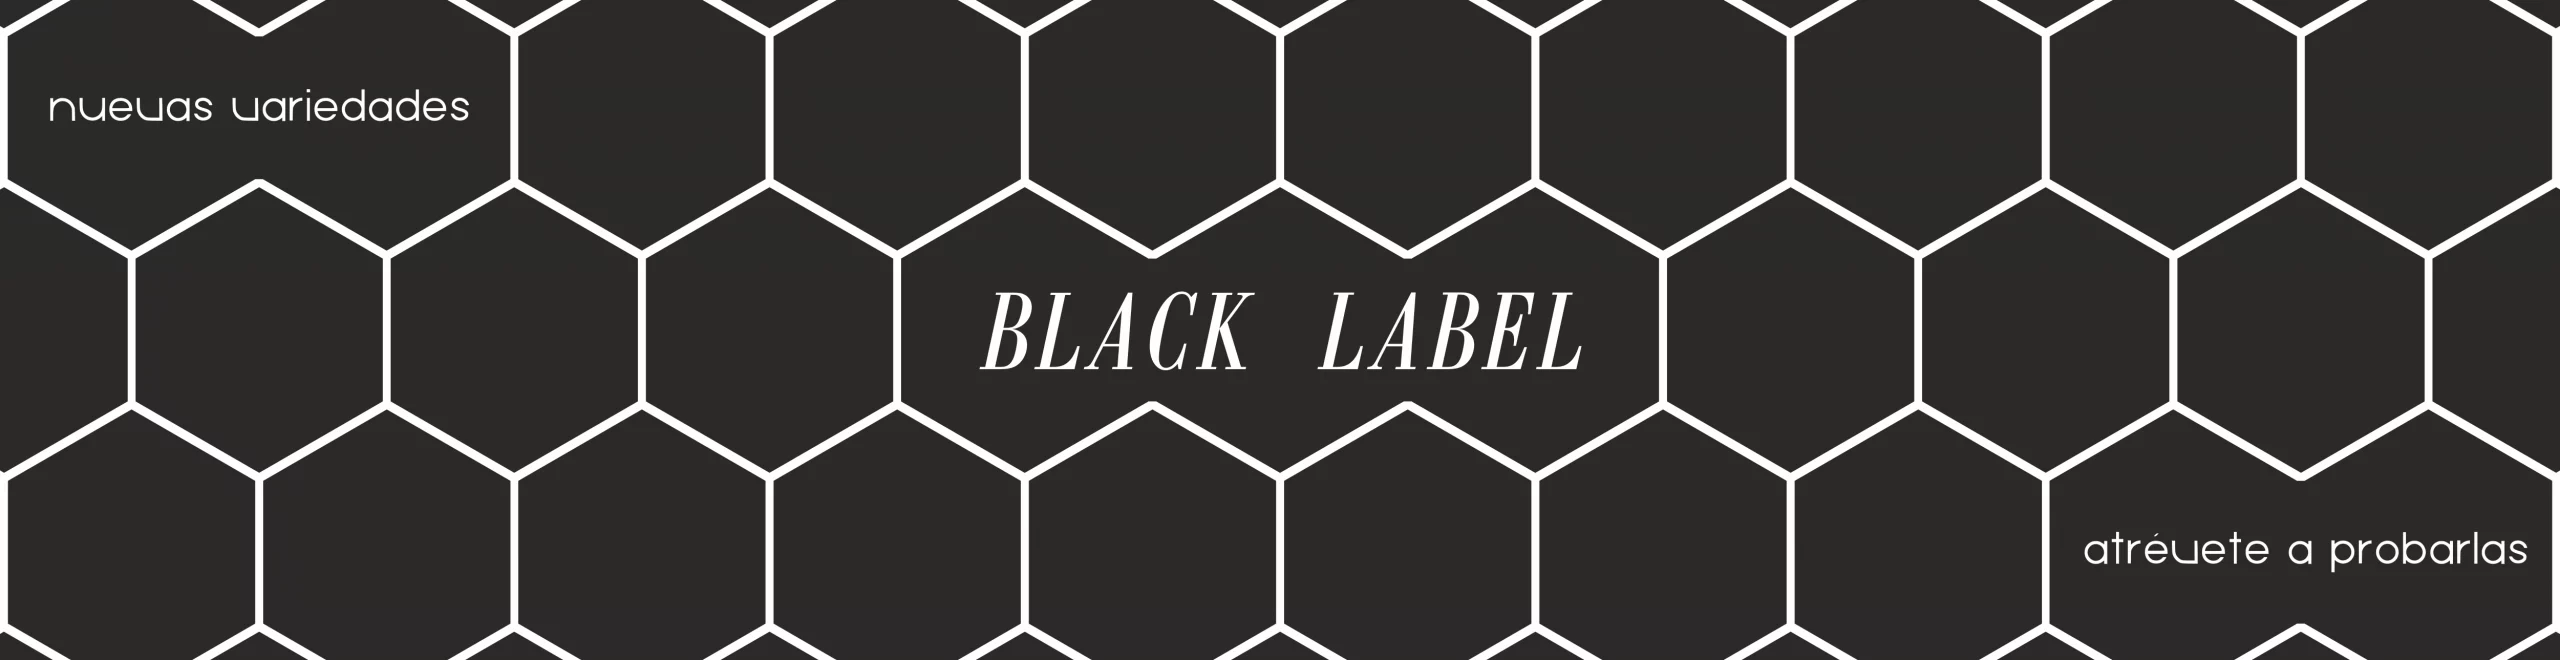 banner black label hhc family foresta para informar de las novedades